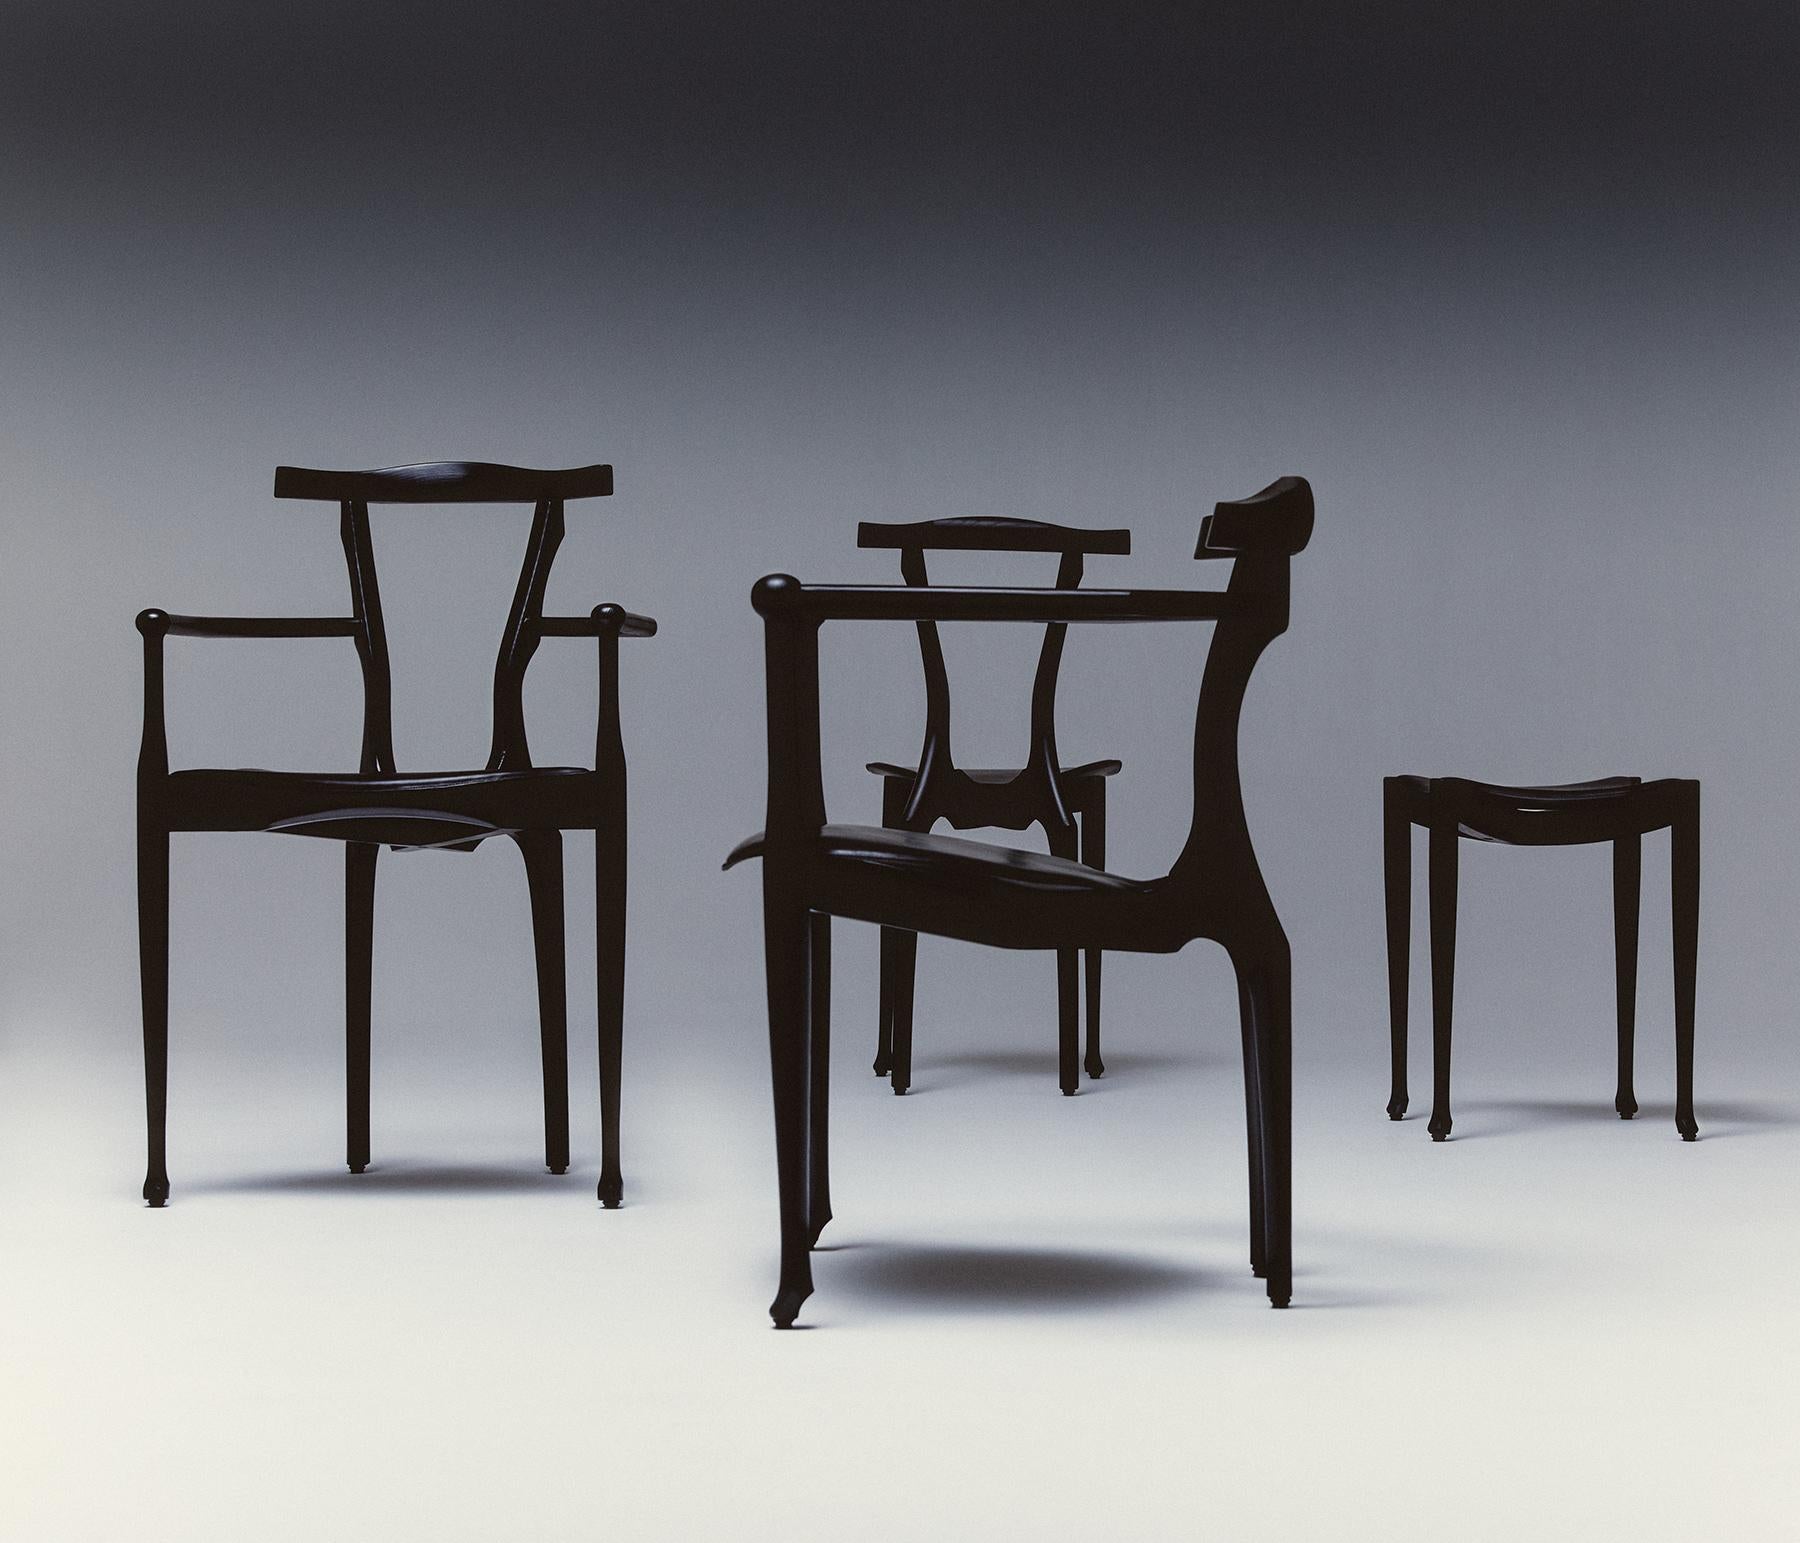 XXIe siècle et contemporain Gaulino Easy Chair by Oscar Tysquets bois de frêne laqué noir, contemporain   en vente